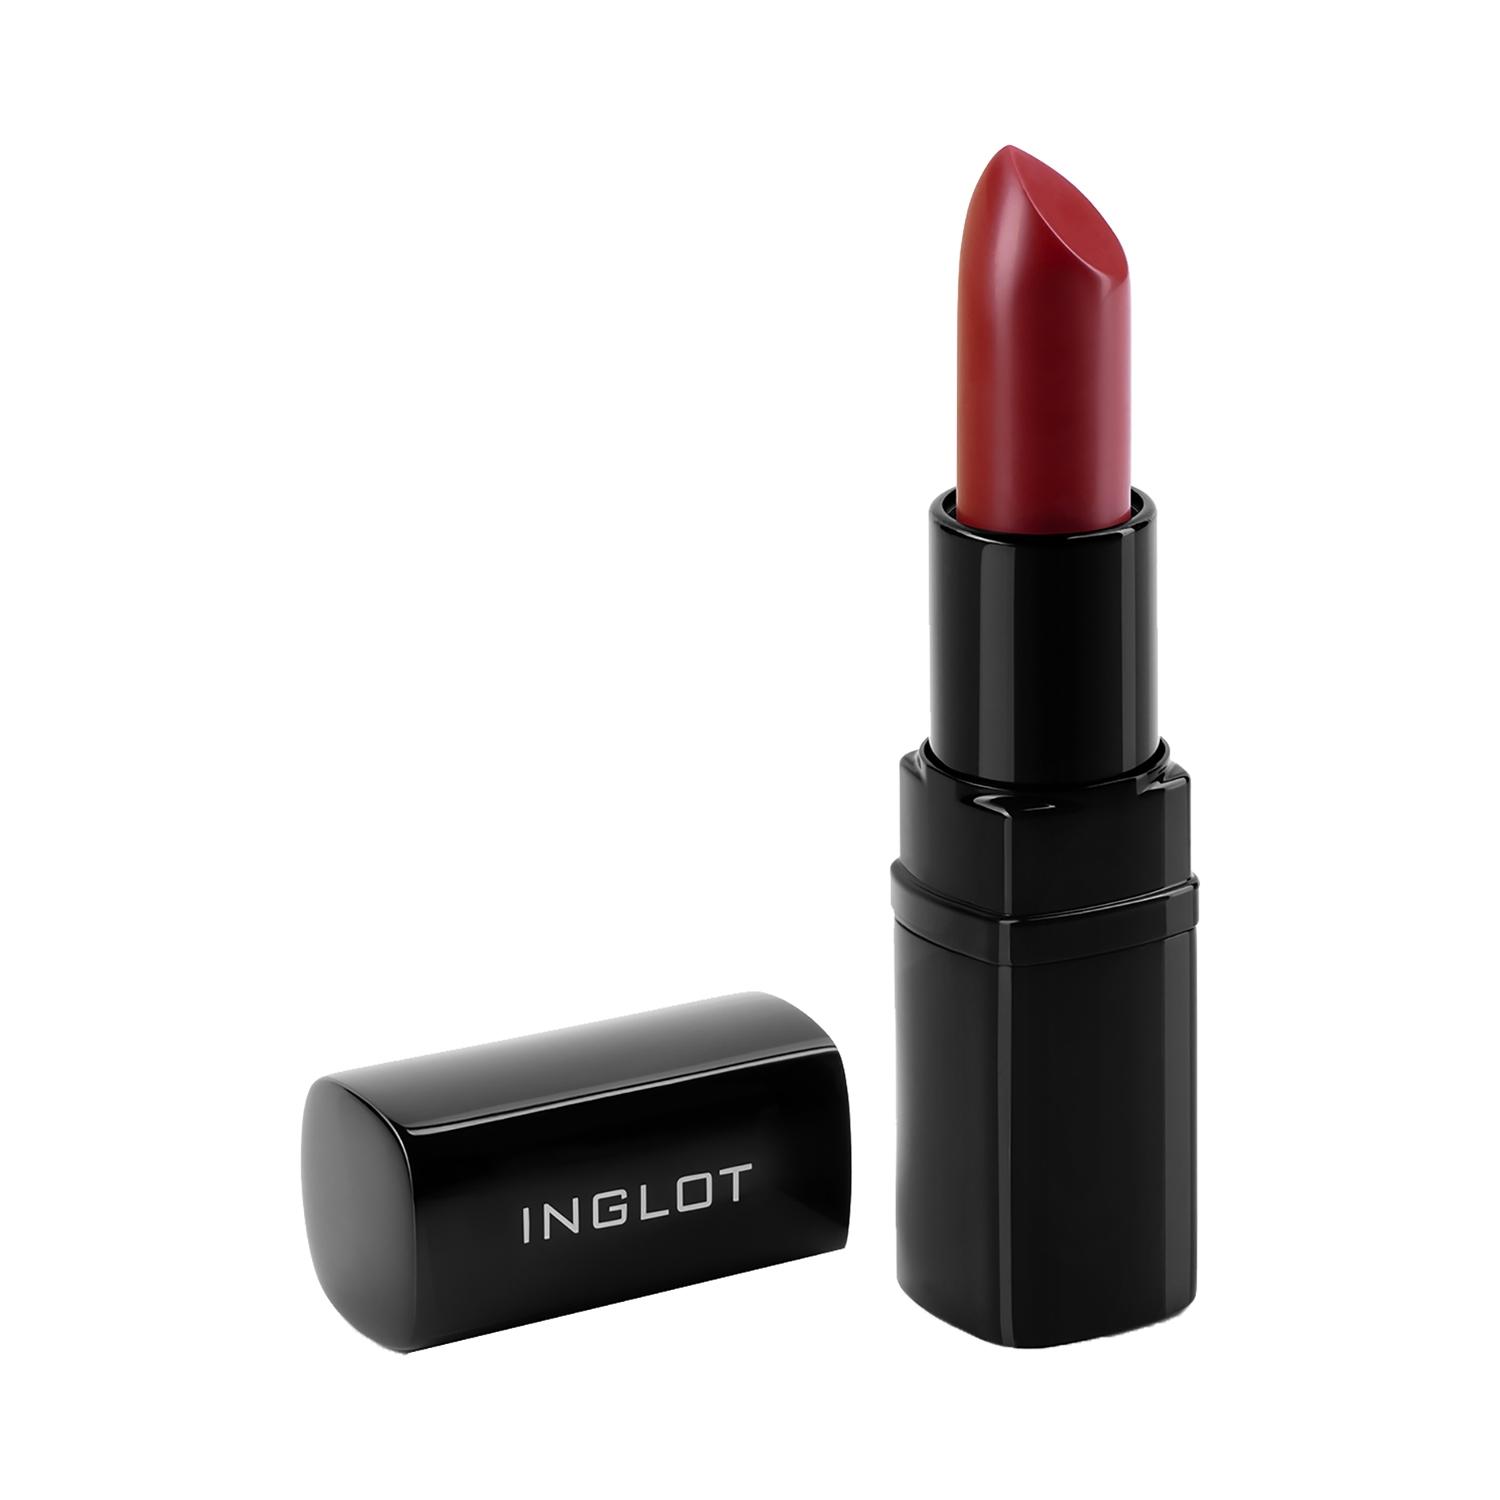 inglot matte lipstick - 409 shade (4.5g)